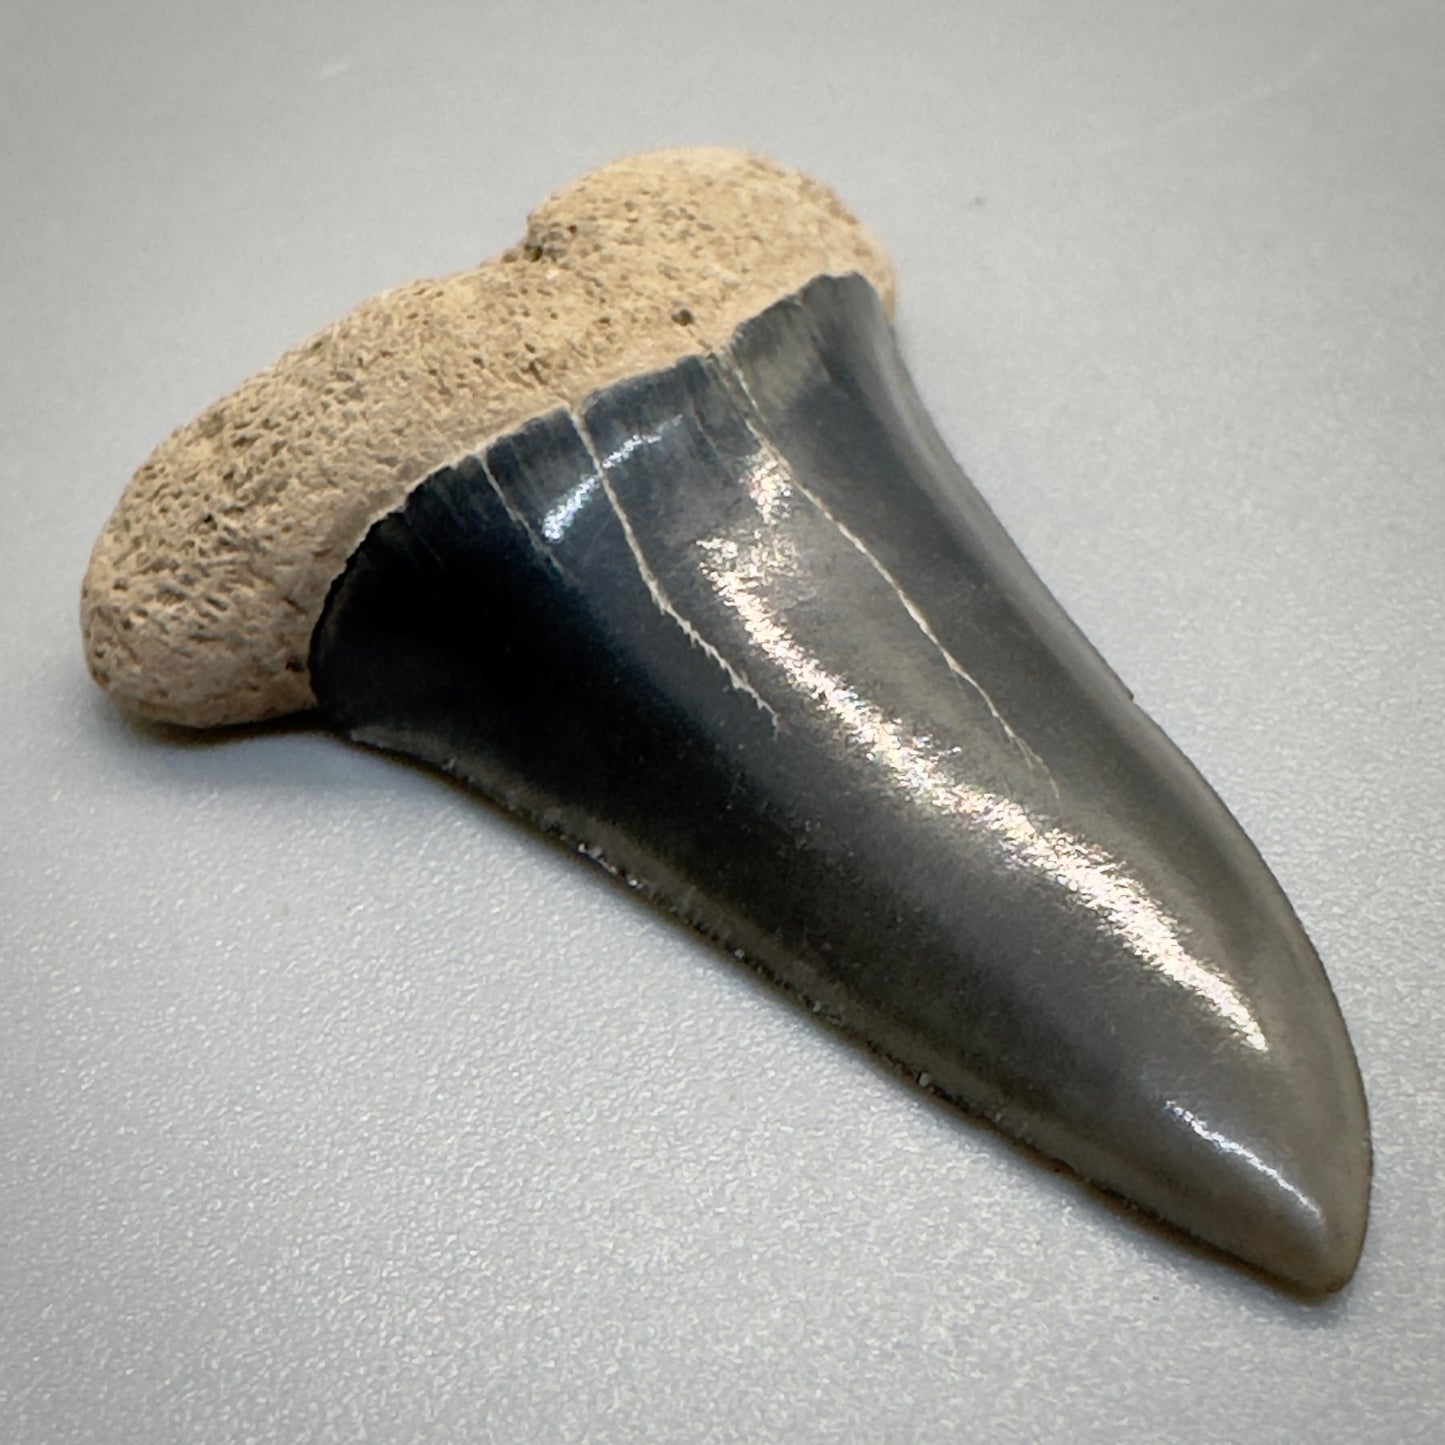 Dark colors 1.54 inches Extinct Longfin Mako - Isurus retroflexus Shark tooth from Southeast, USA M519 front left